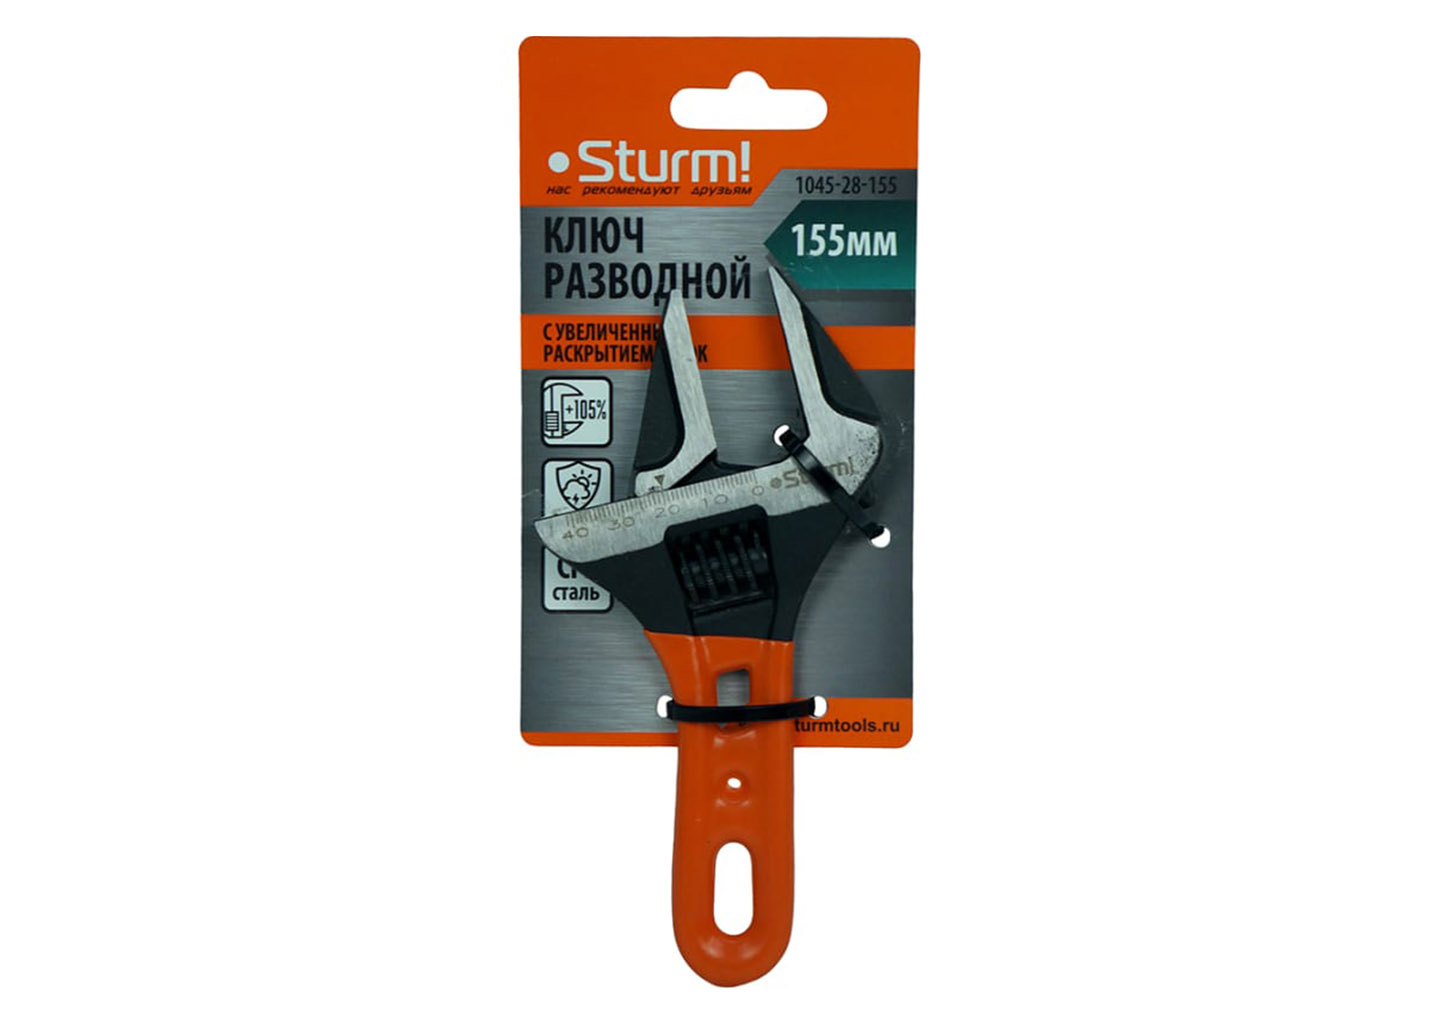 Разводной ключ c короткой ручкой Sturm 155мм 1045-28-155